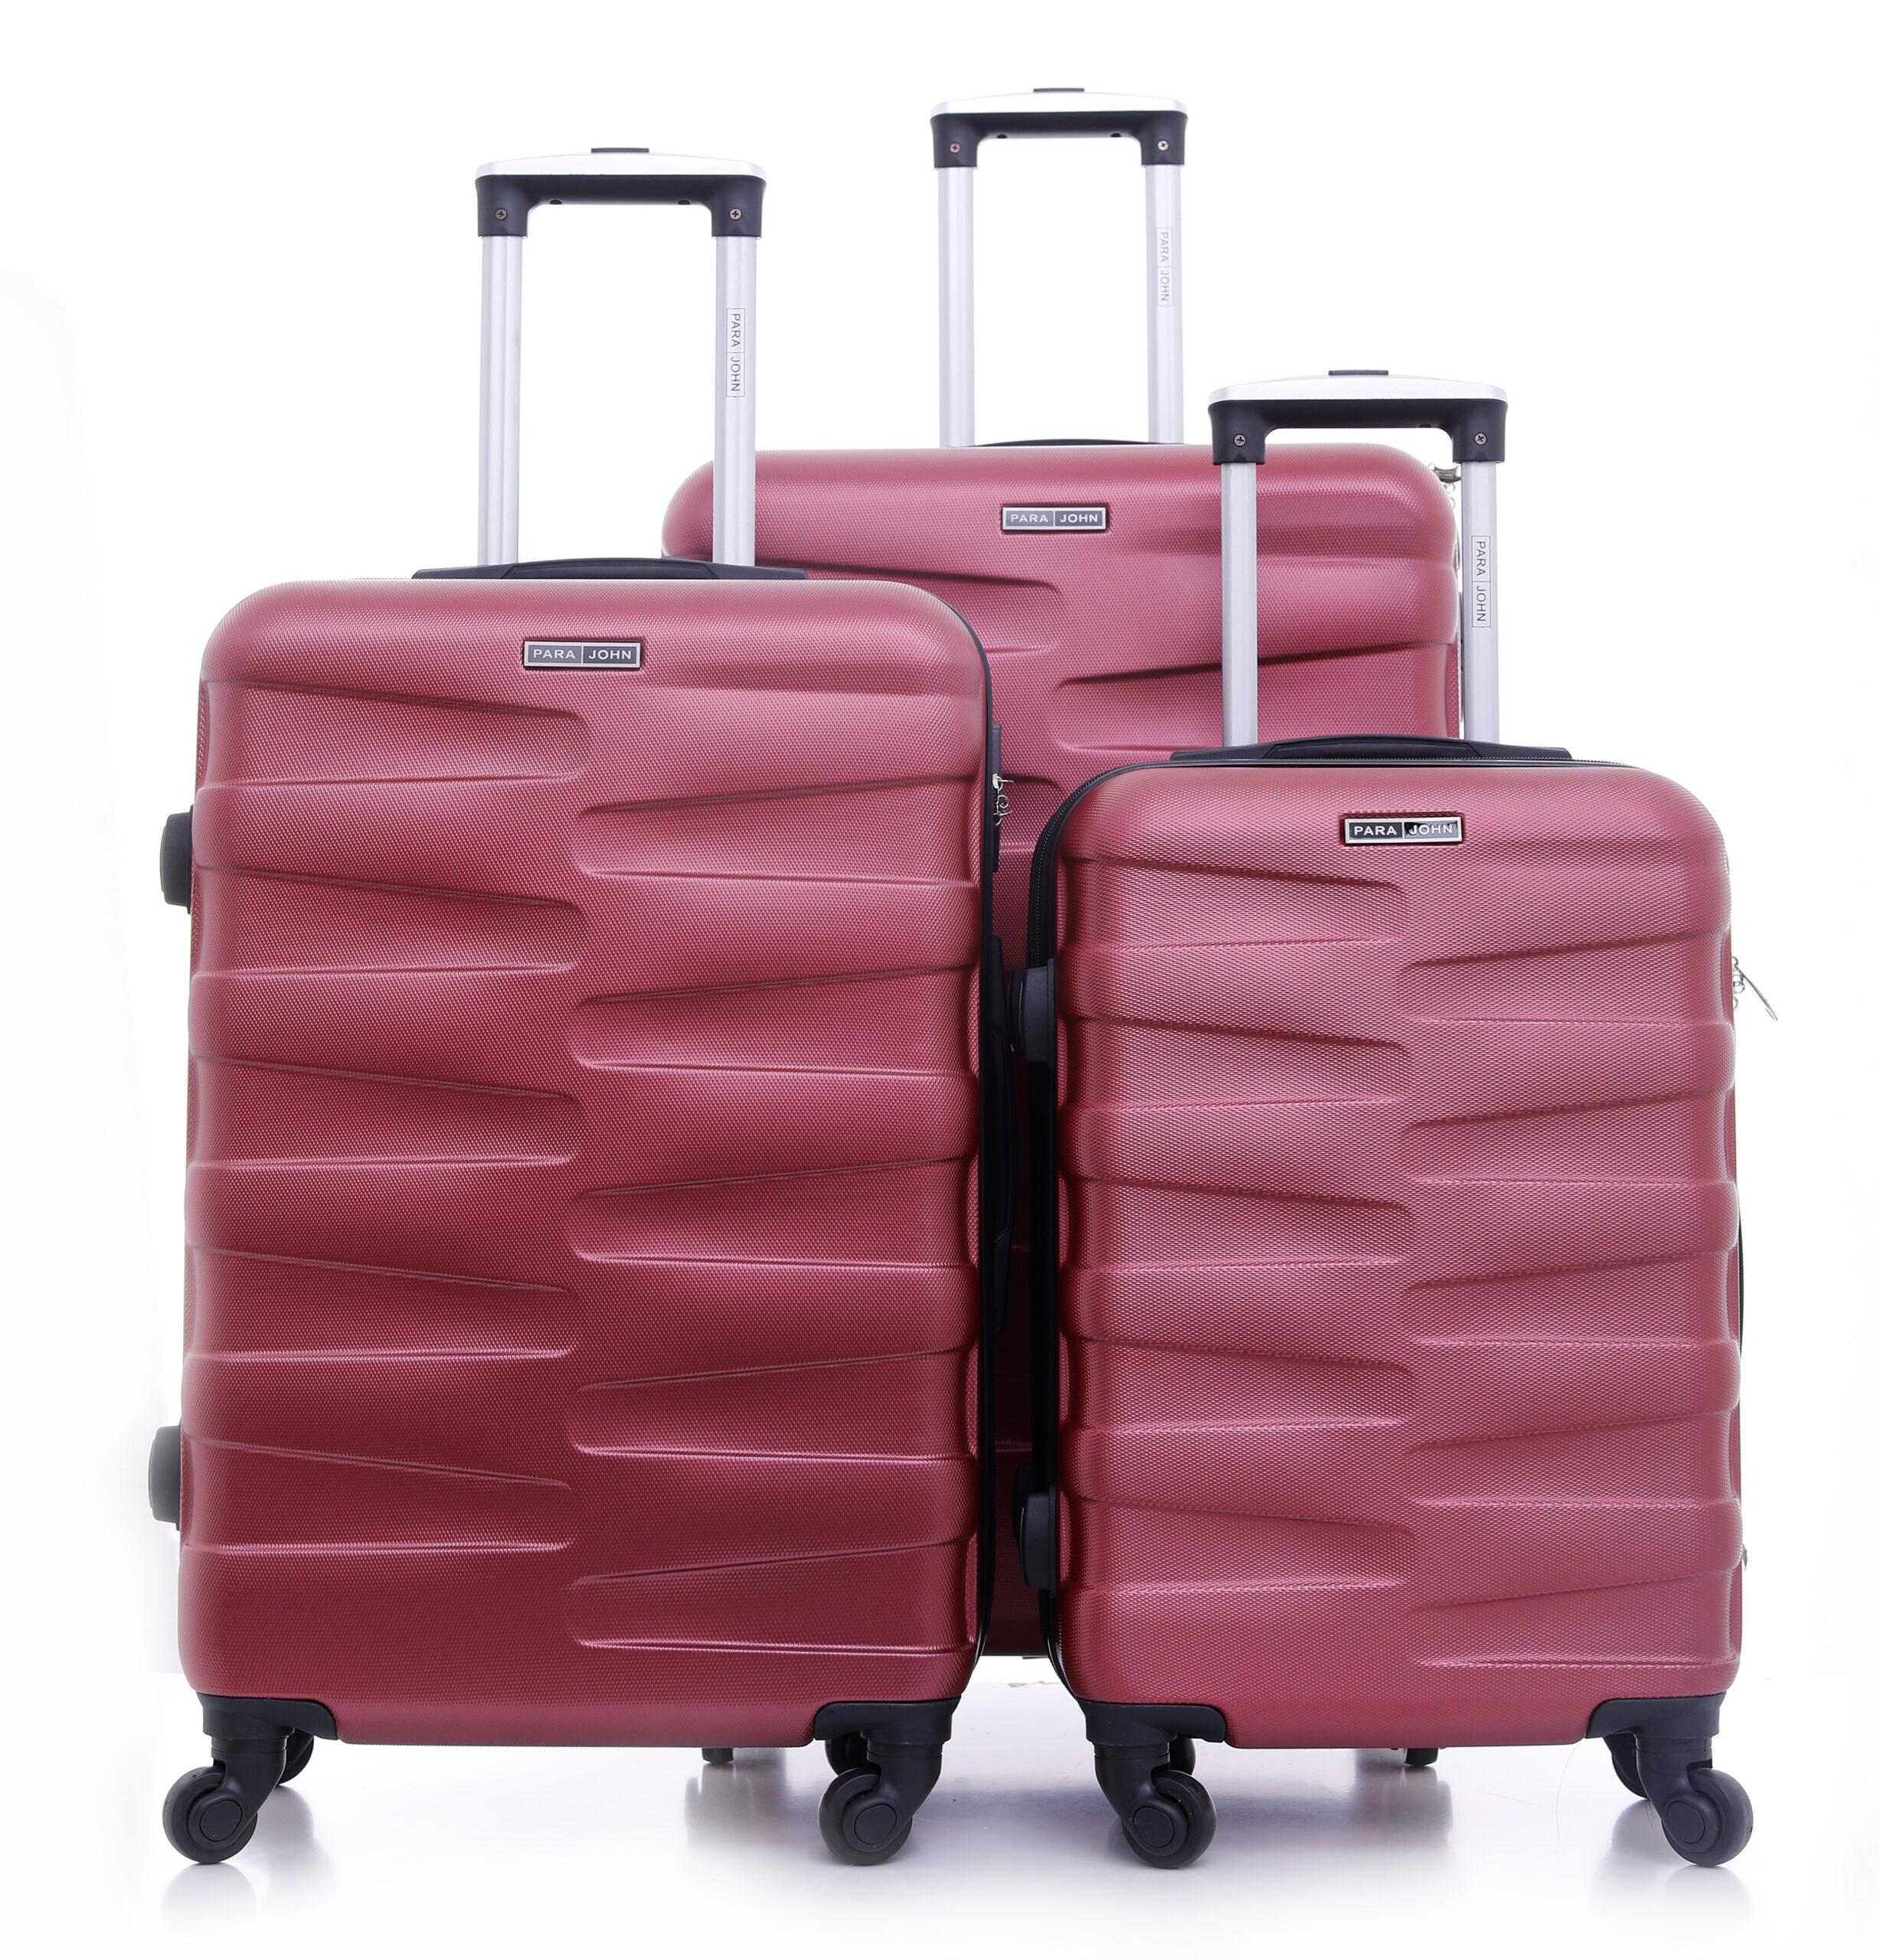 طقم حقائب سفر 3 حقائب مادة ABS بعجلات دوارة (20 ، 24 ، 28) بوصة أحمر برغندي PARA JOHN – Travel Luggage Suitcase, Set of 3 – Trolley Bag, Carry On Hand Cabin Luggage Bag